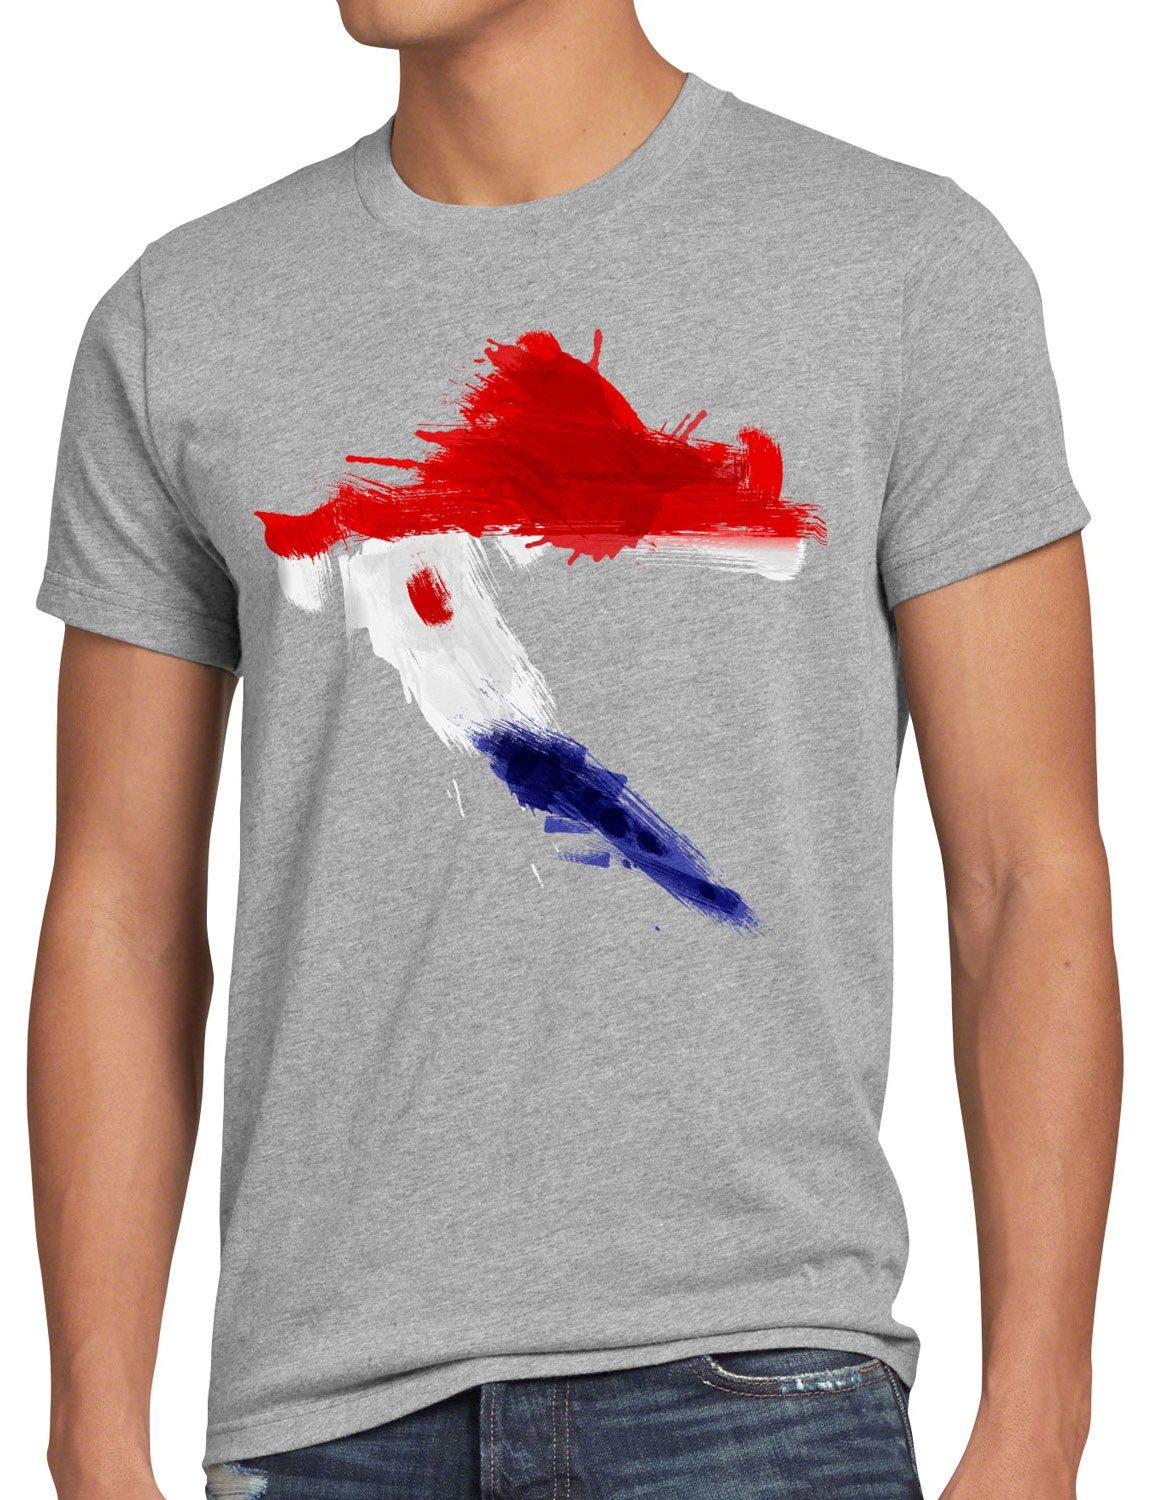 T-Shirt grau Flagge WM style3 Fahne Print-Shirt Sport meliert EM Herren Fußball Kroatien Croatia